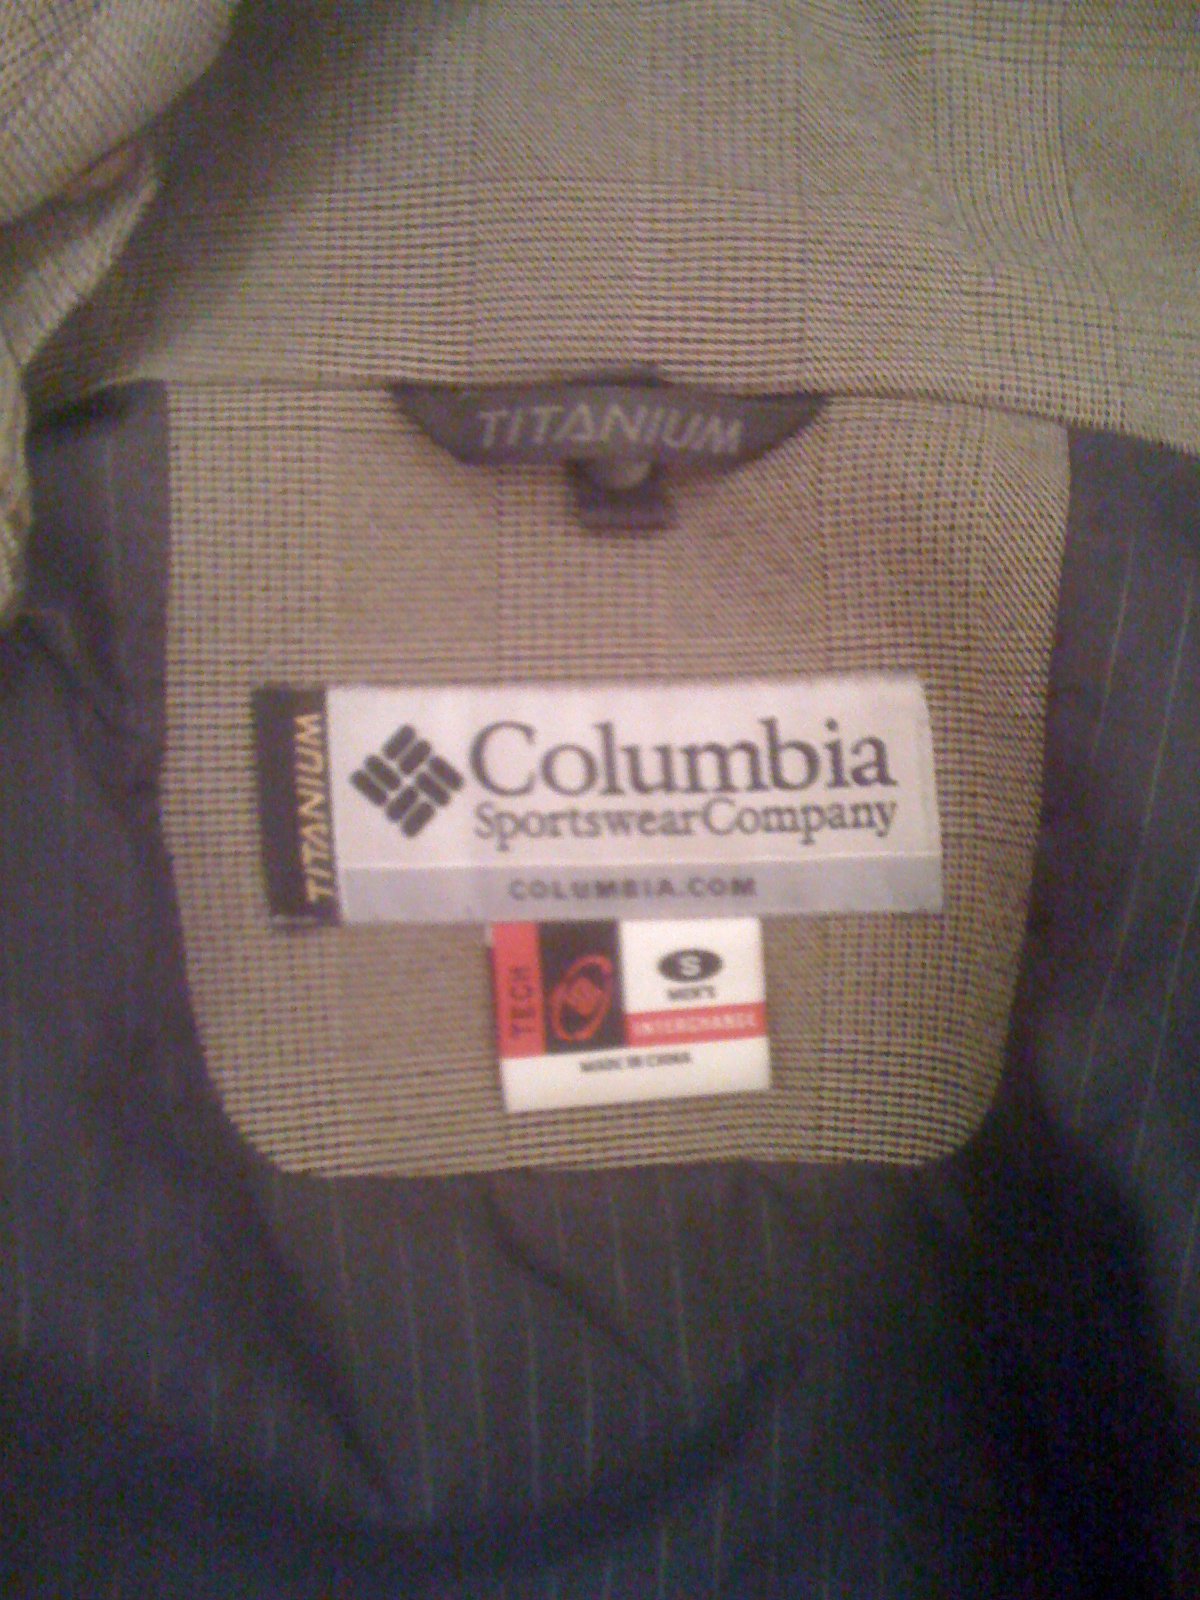 Tag of columbia jacket